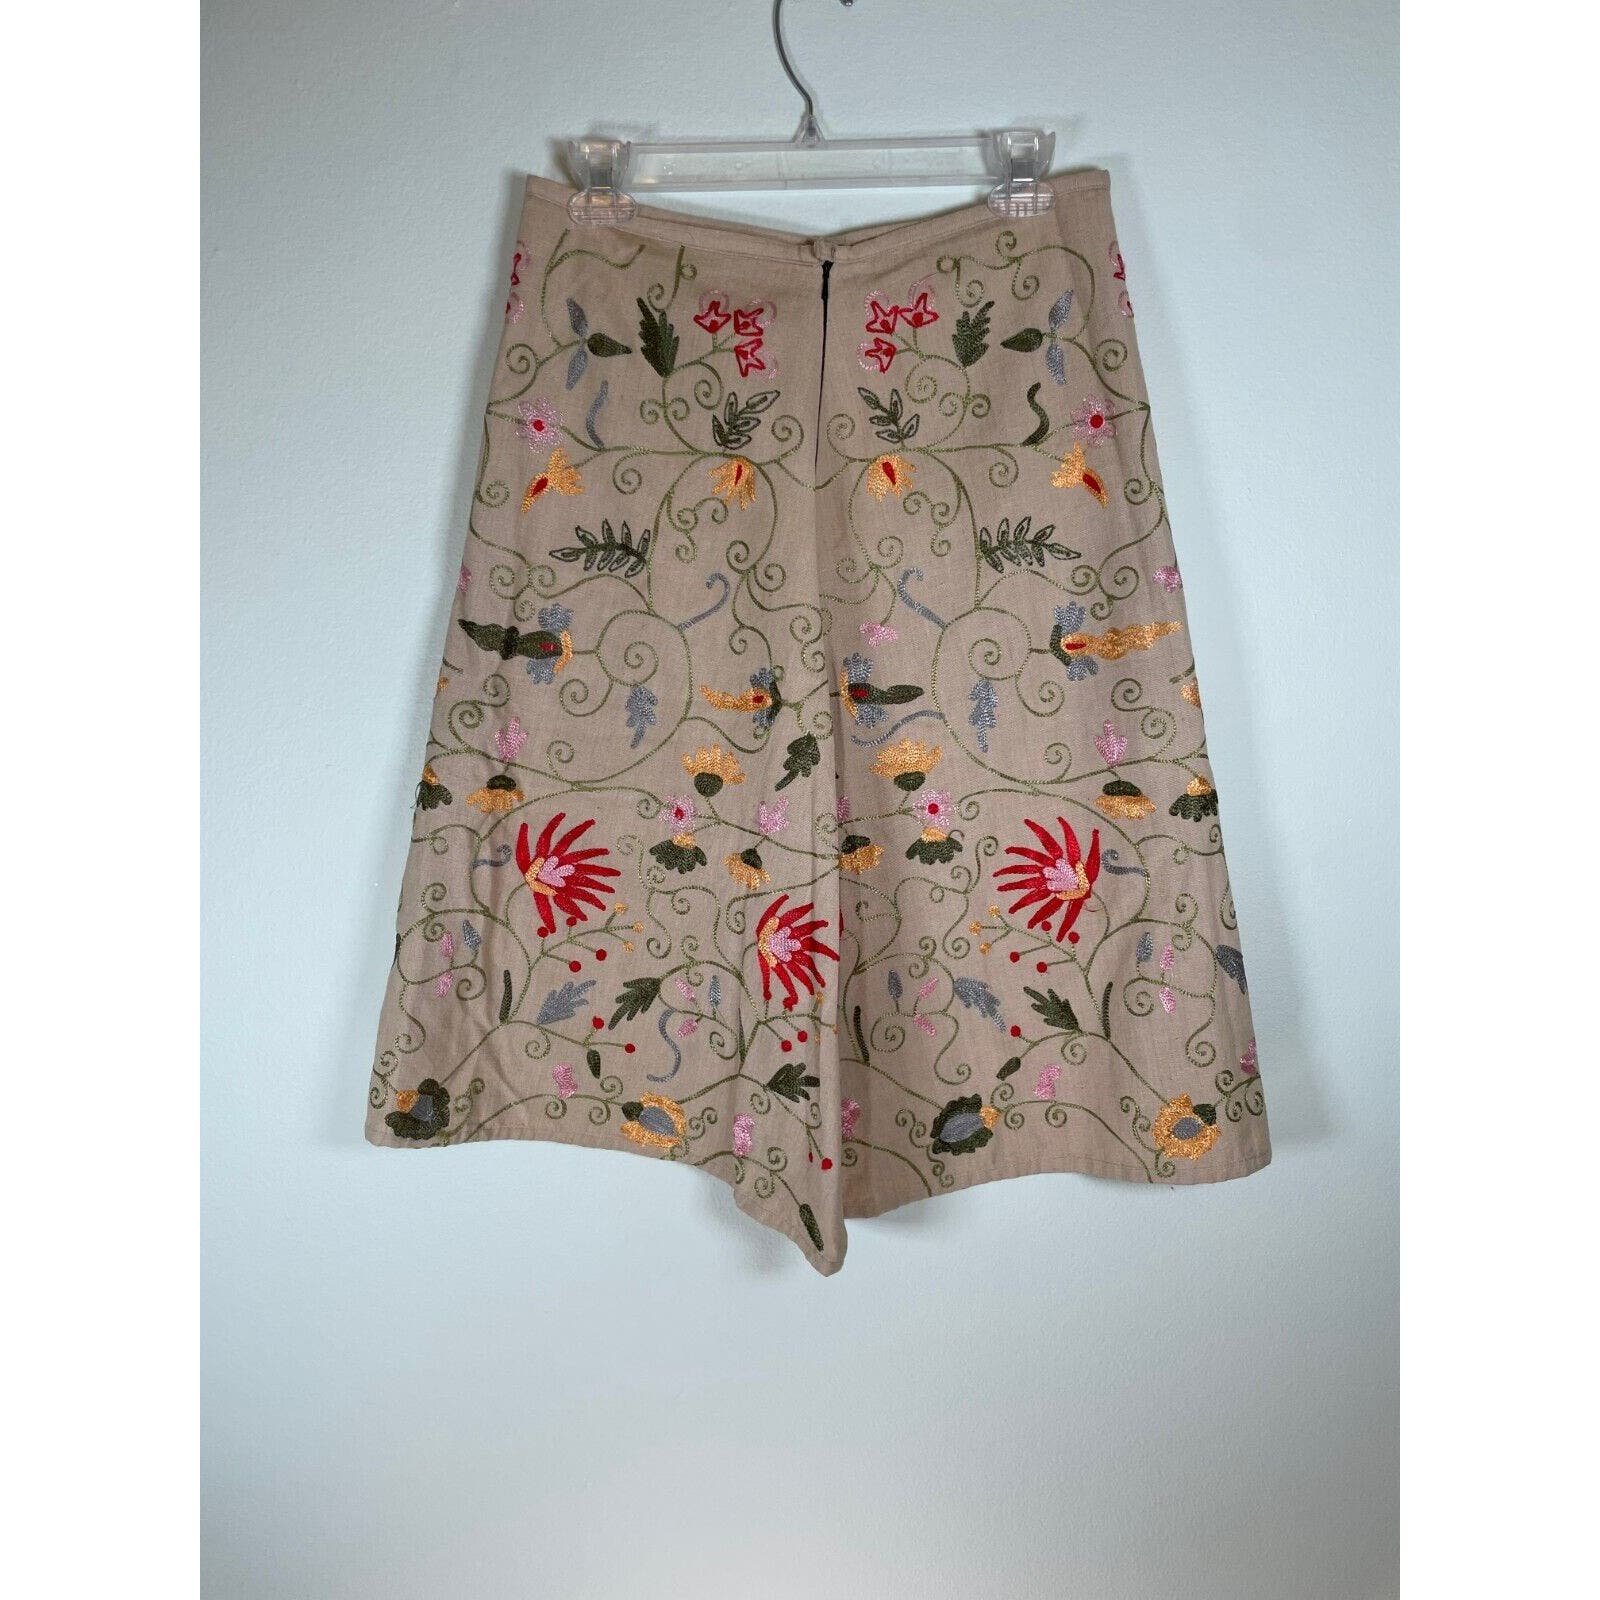 Fashion Vintage Womens Skirt Size 10 Tan Floral Embroidered Linen Cottagecore Boho 70s P9r5ztqA9 Online Exclusive